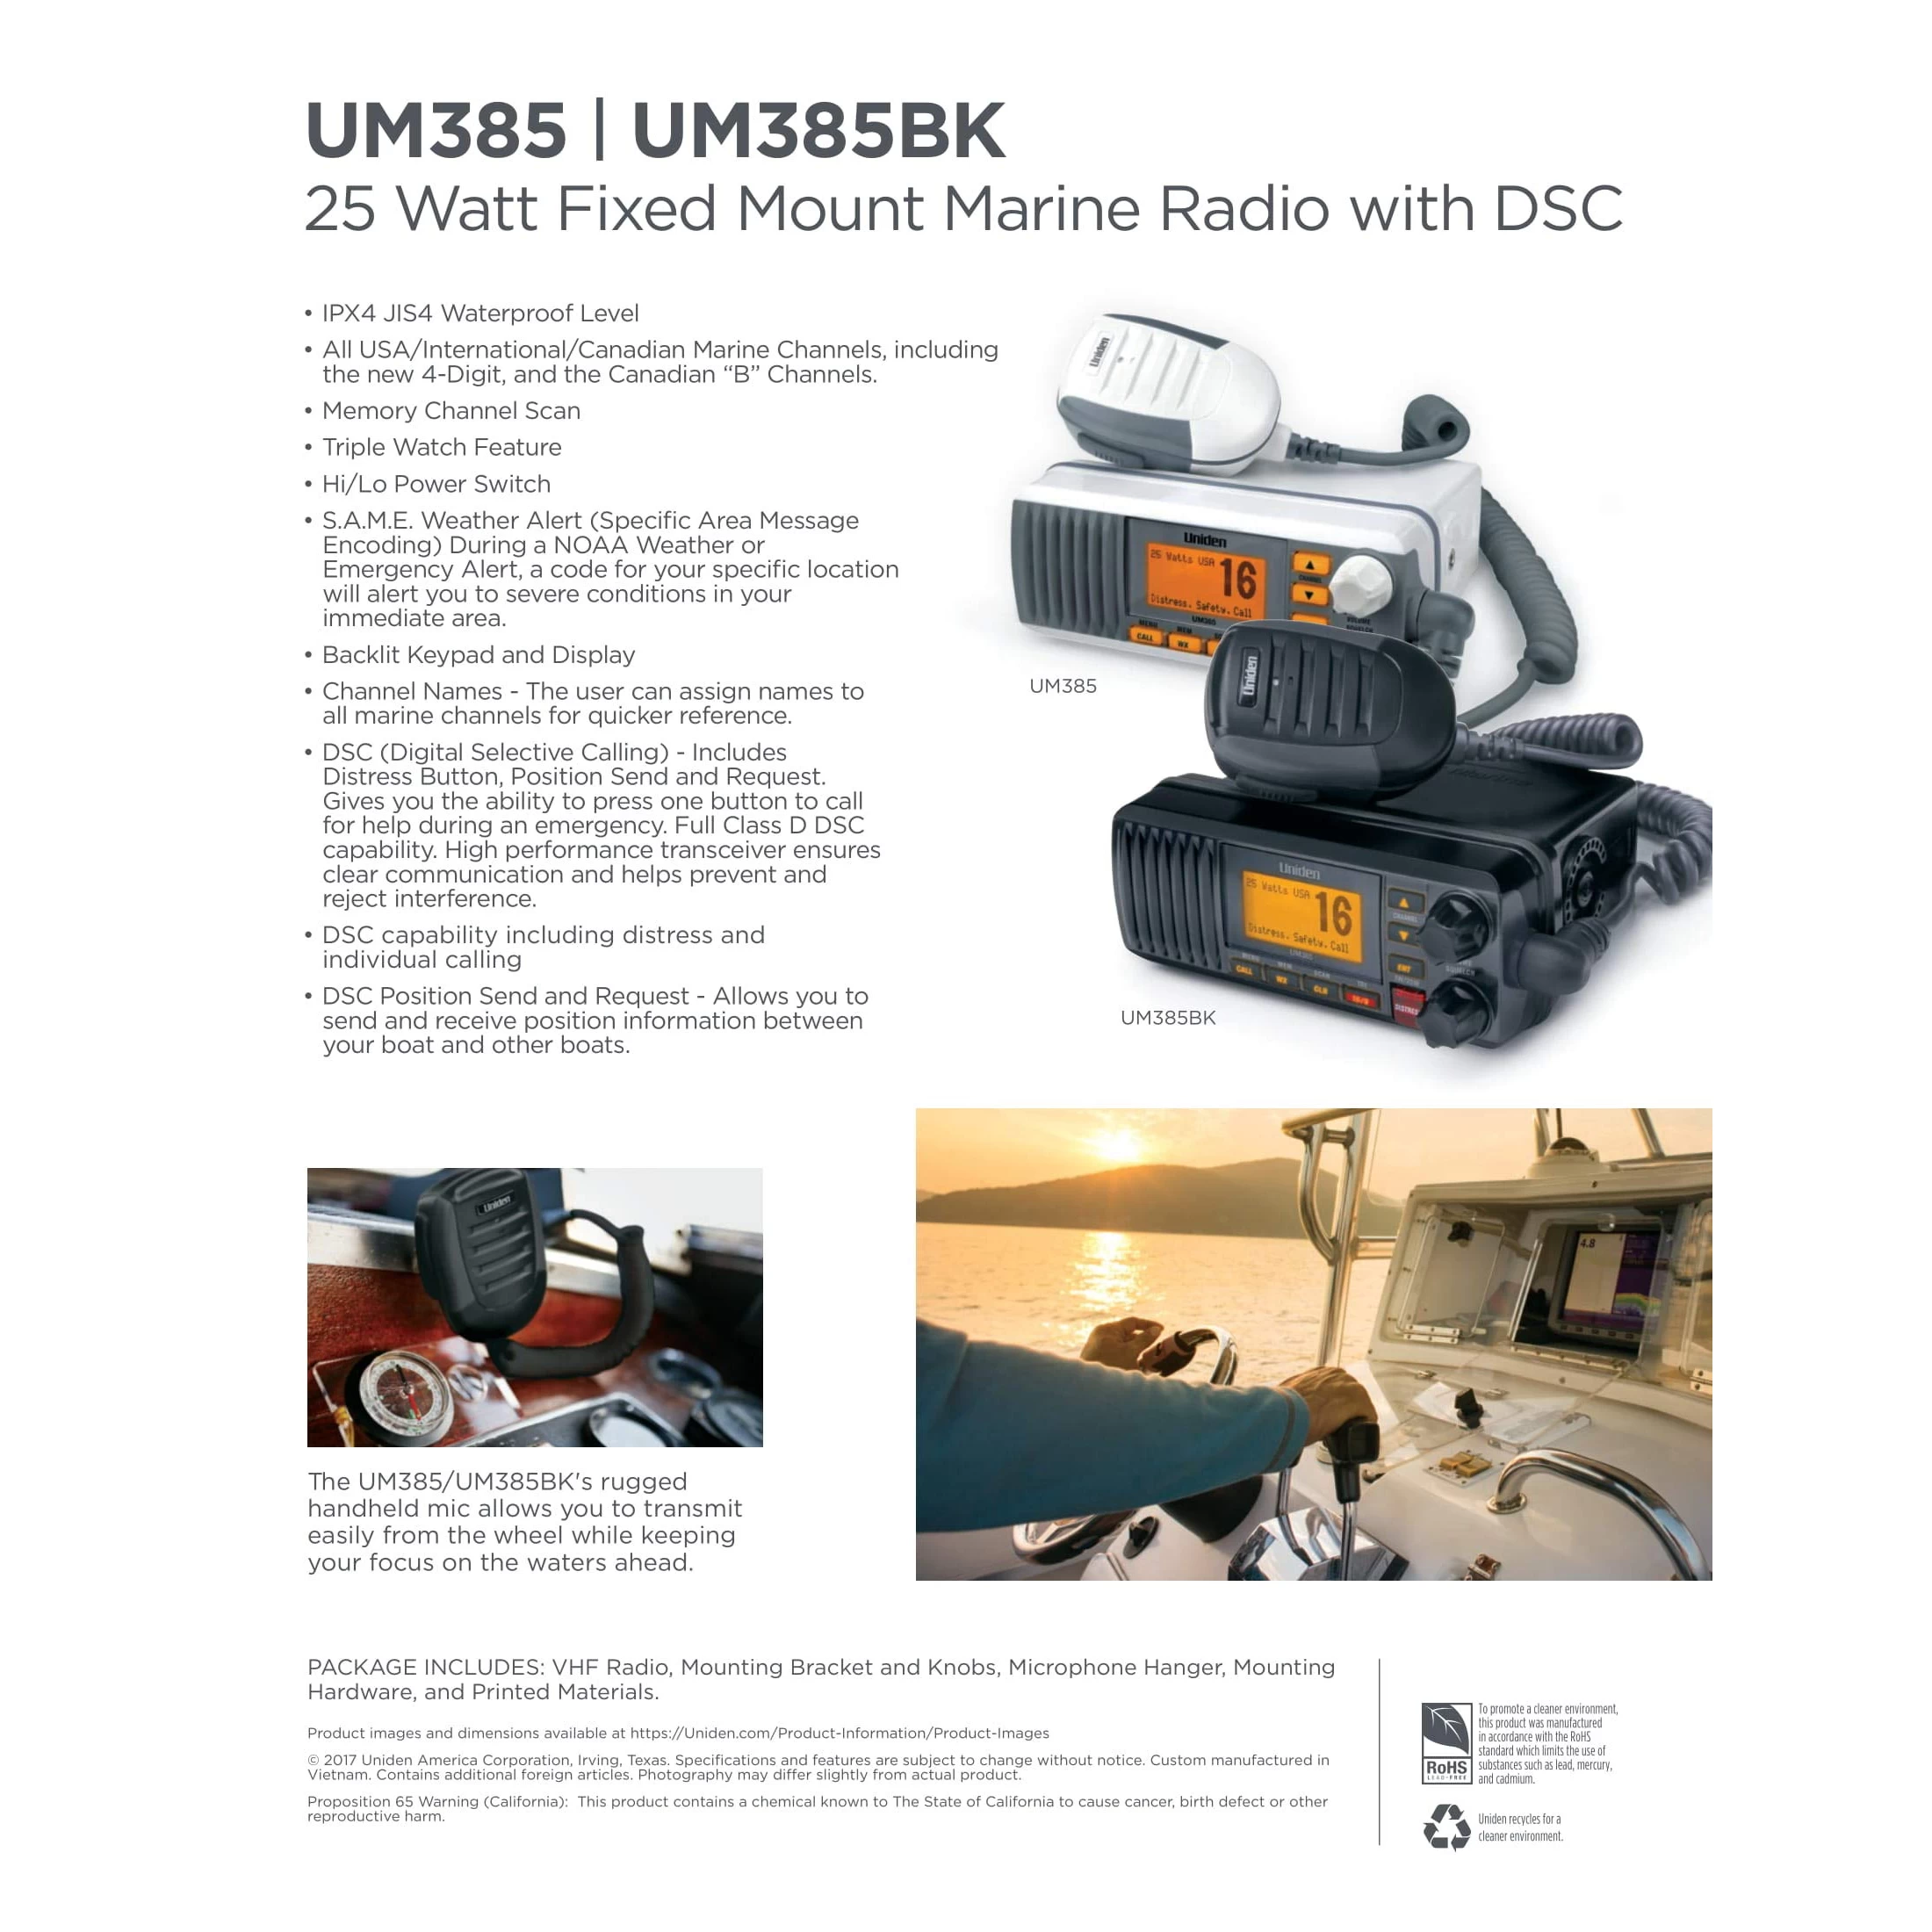 Uniden UM385 VHF Marine Radio Full Class D DSC Capability High Performance  The Antenna Farm